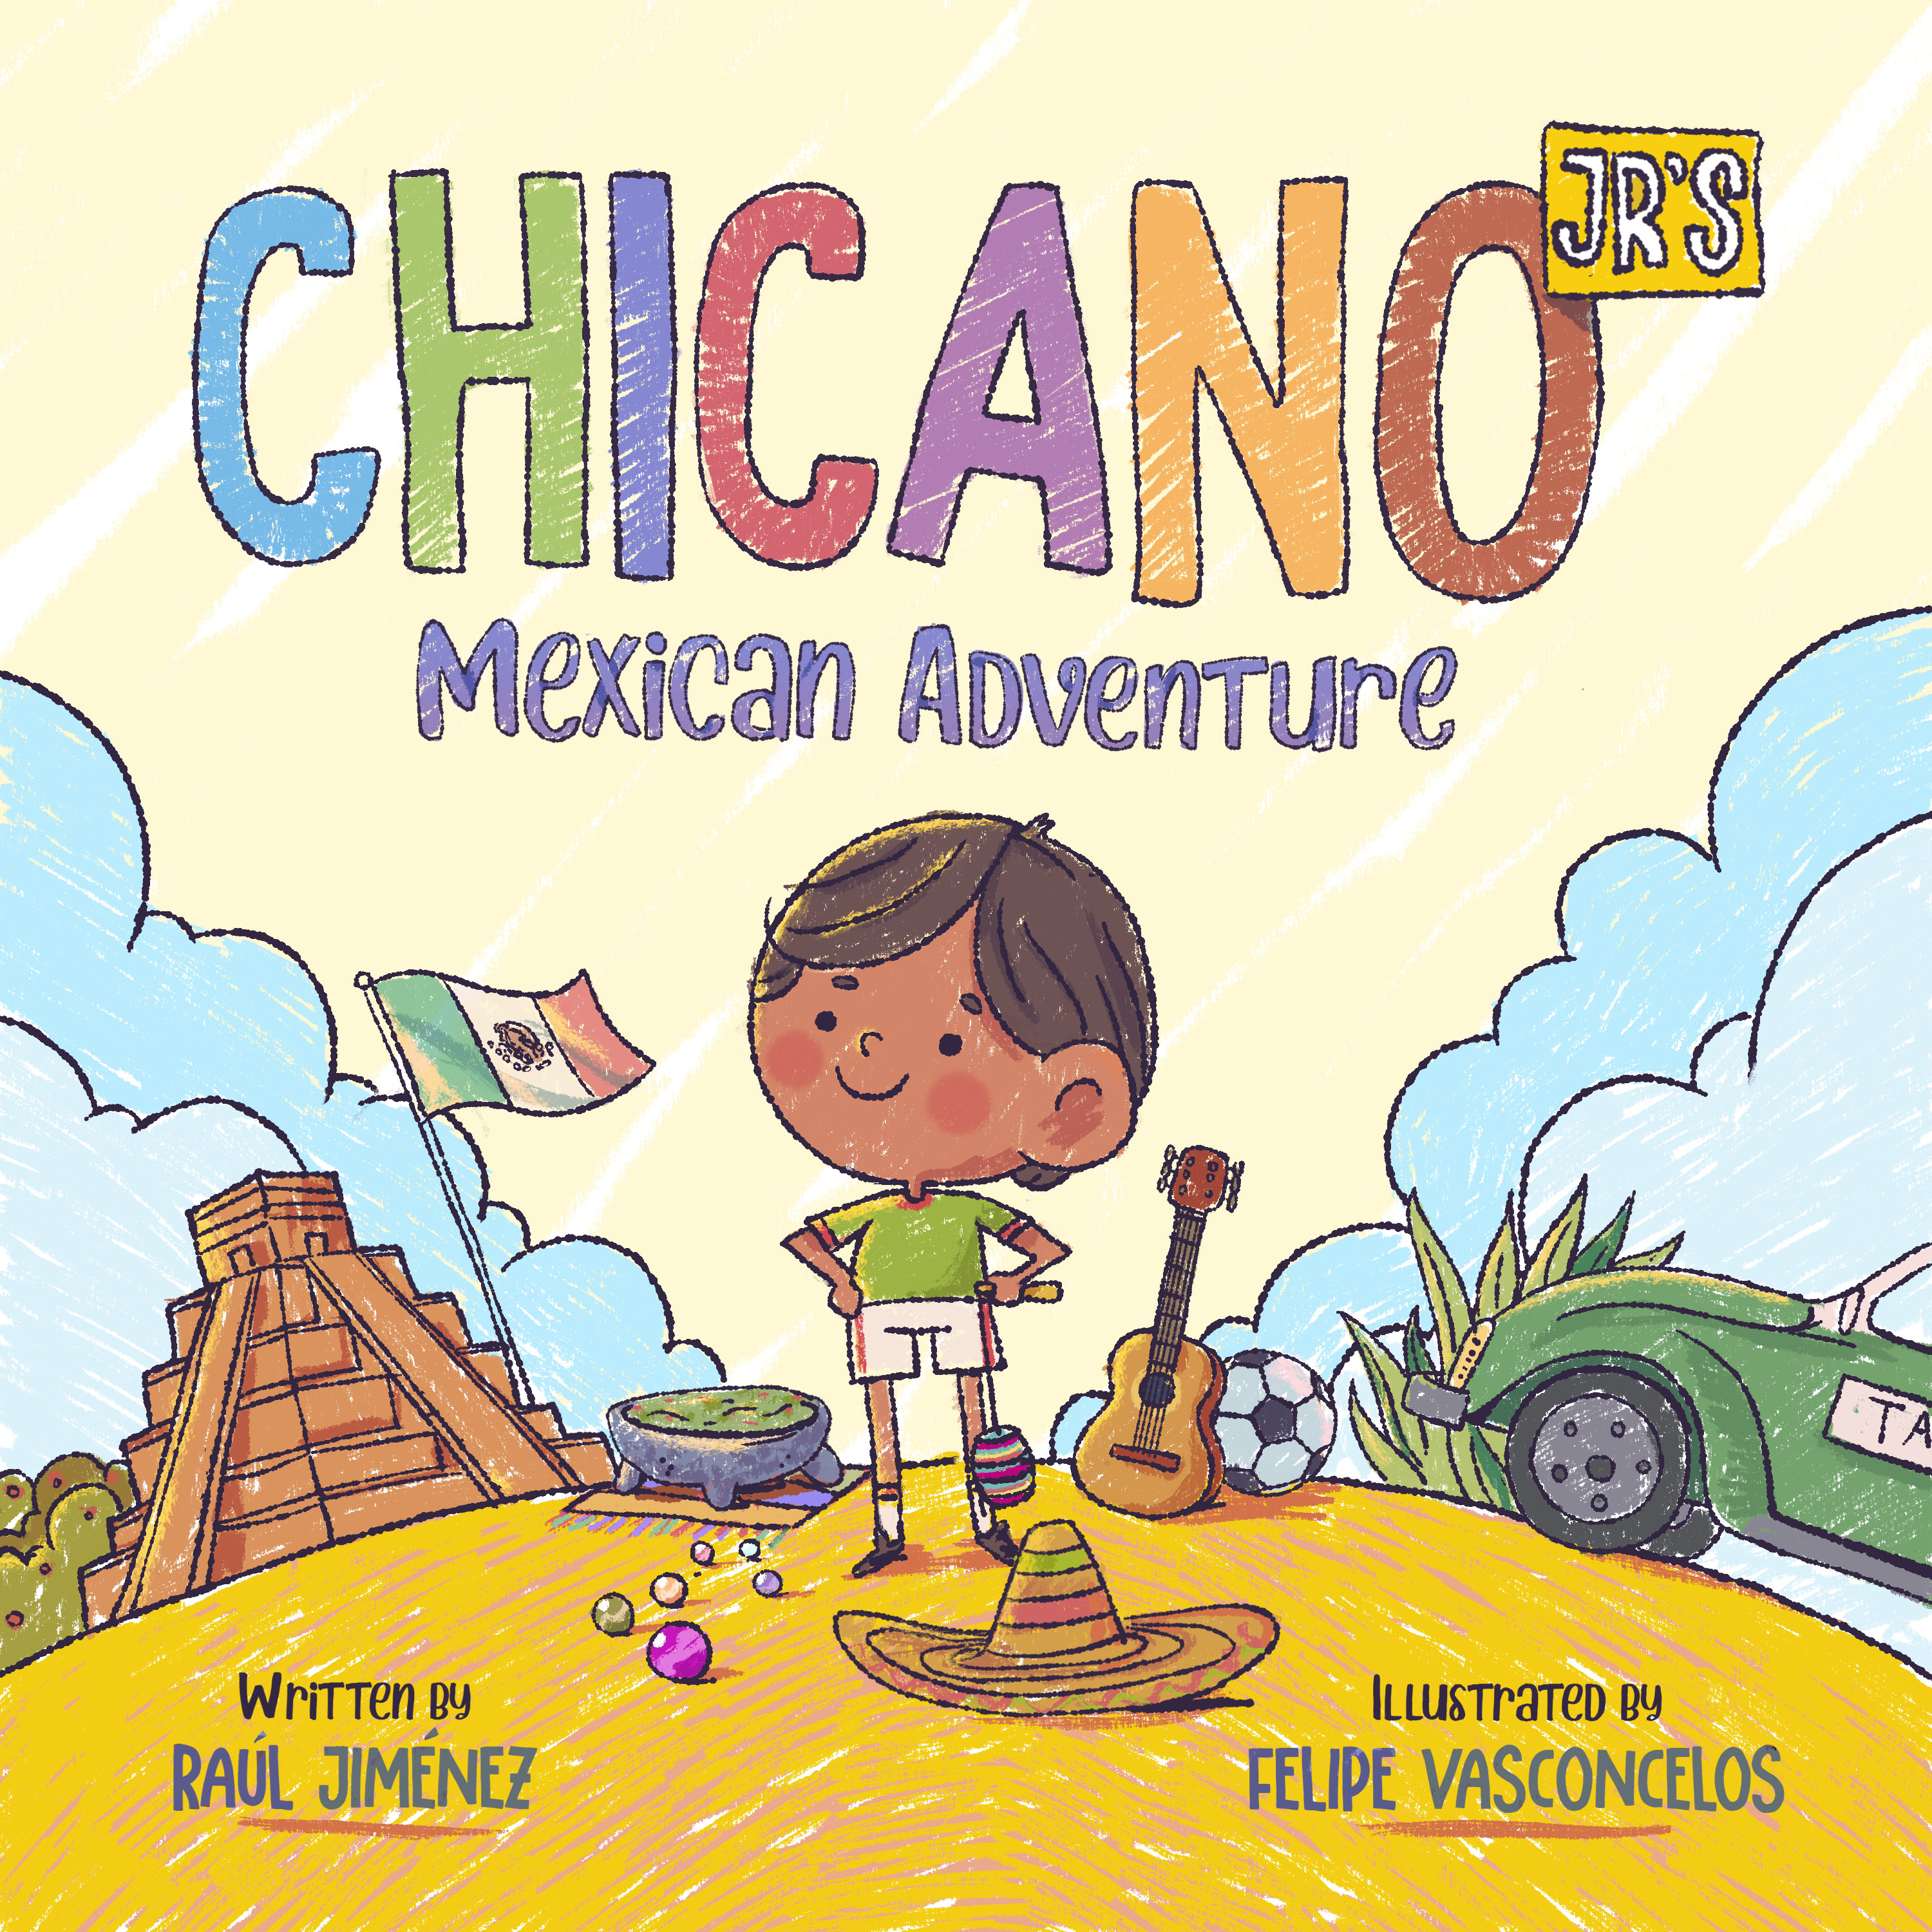 Chicano Jr"s Mexican Adventure